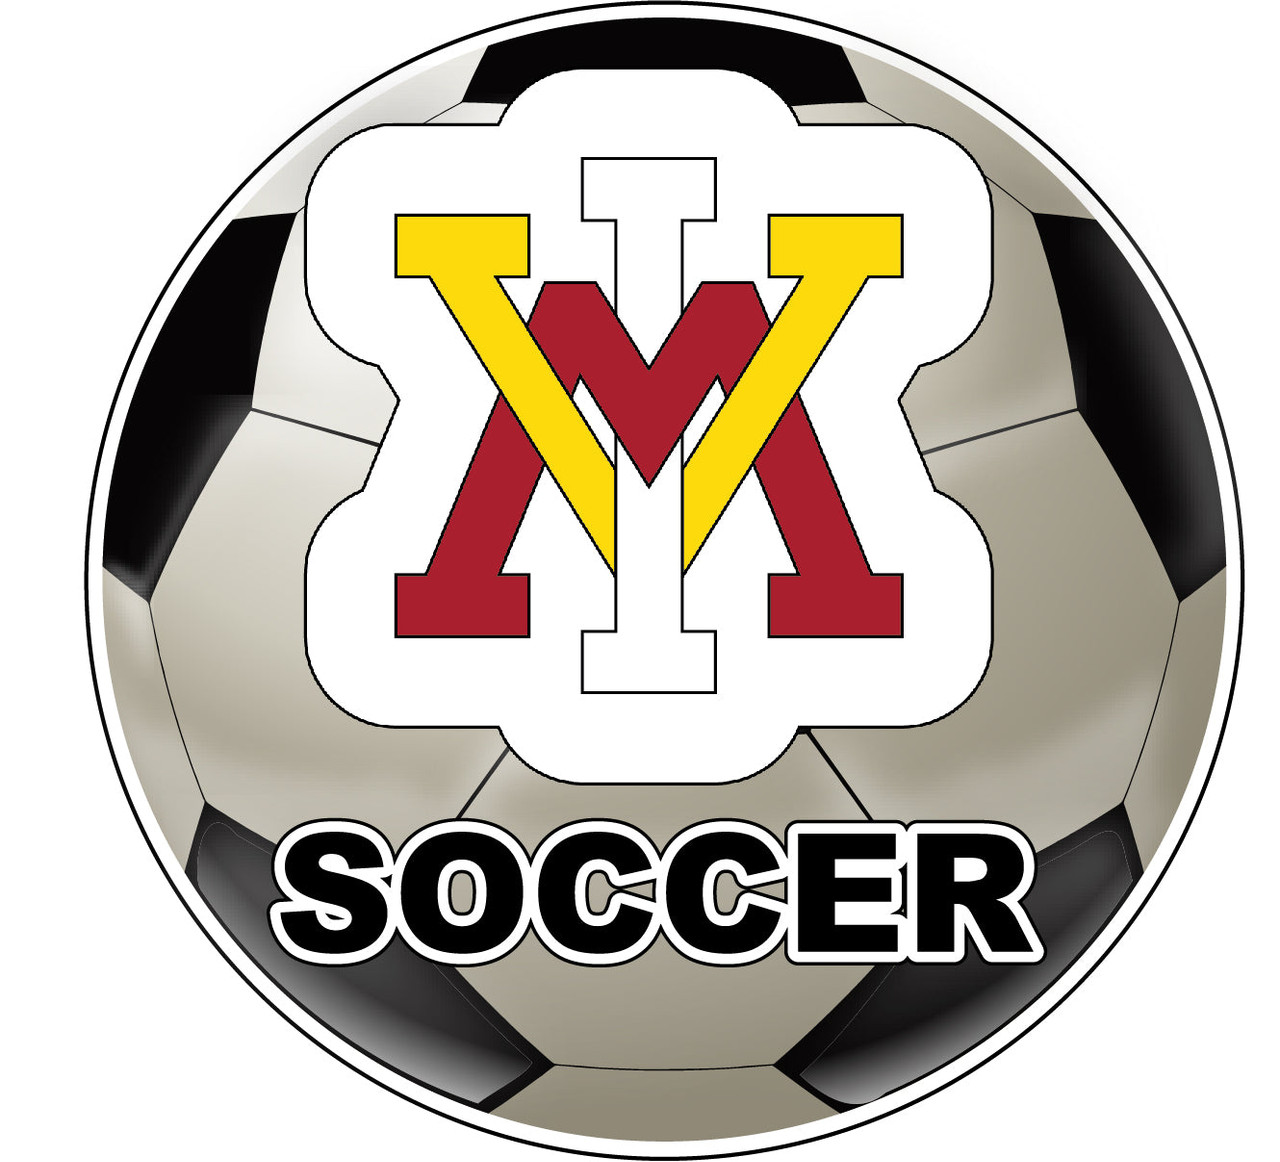 VMI Keydets 4-Inch Round Soccer Ball Vinyl Decal Sticker